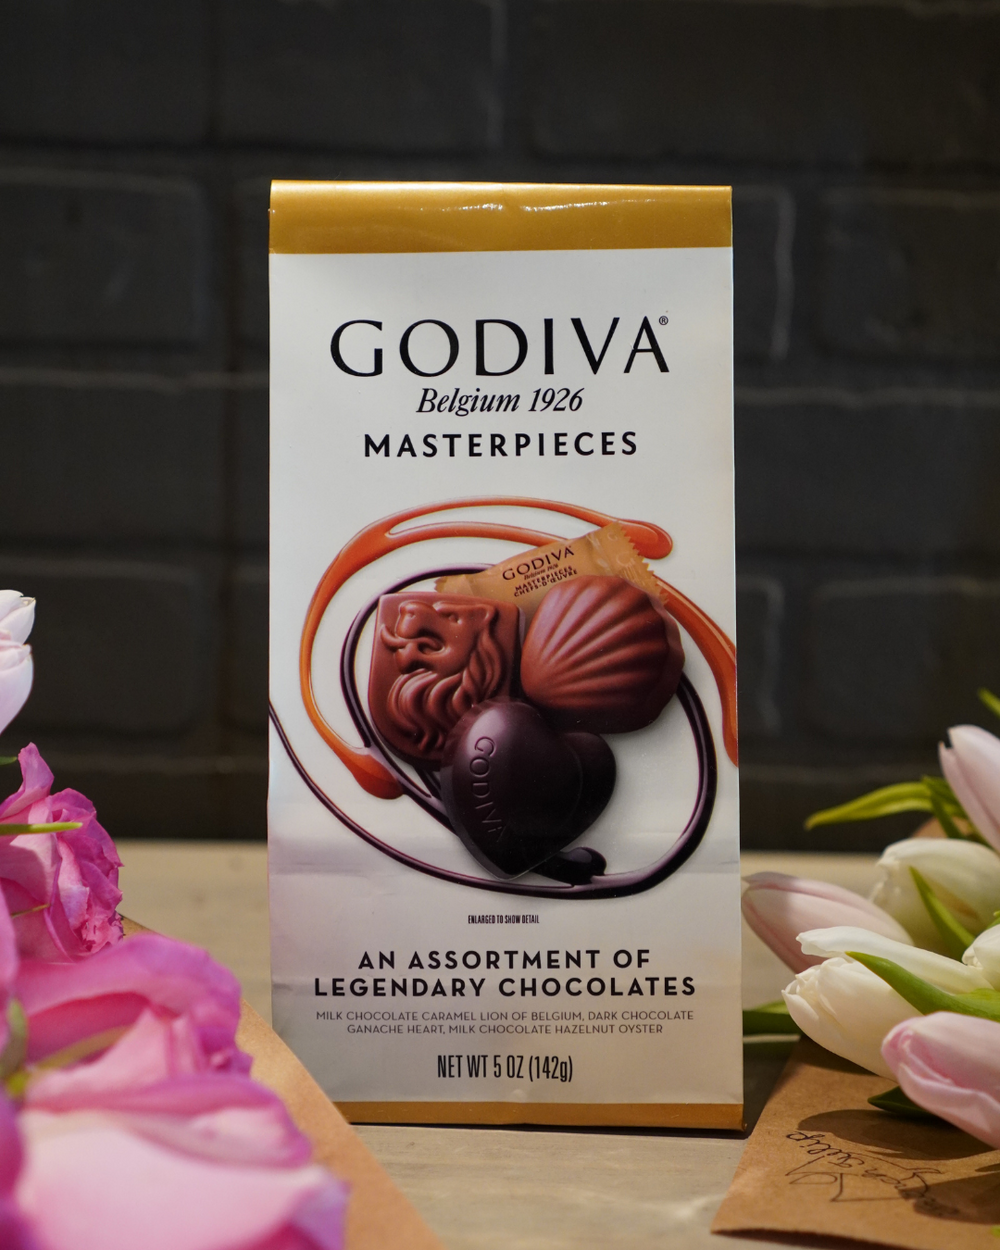 Godiva Masterpieces Assortment Legendary Chocolates